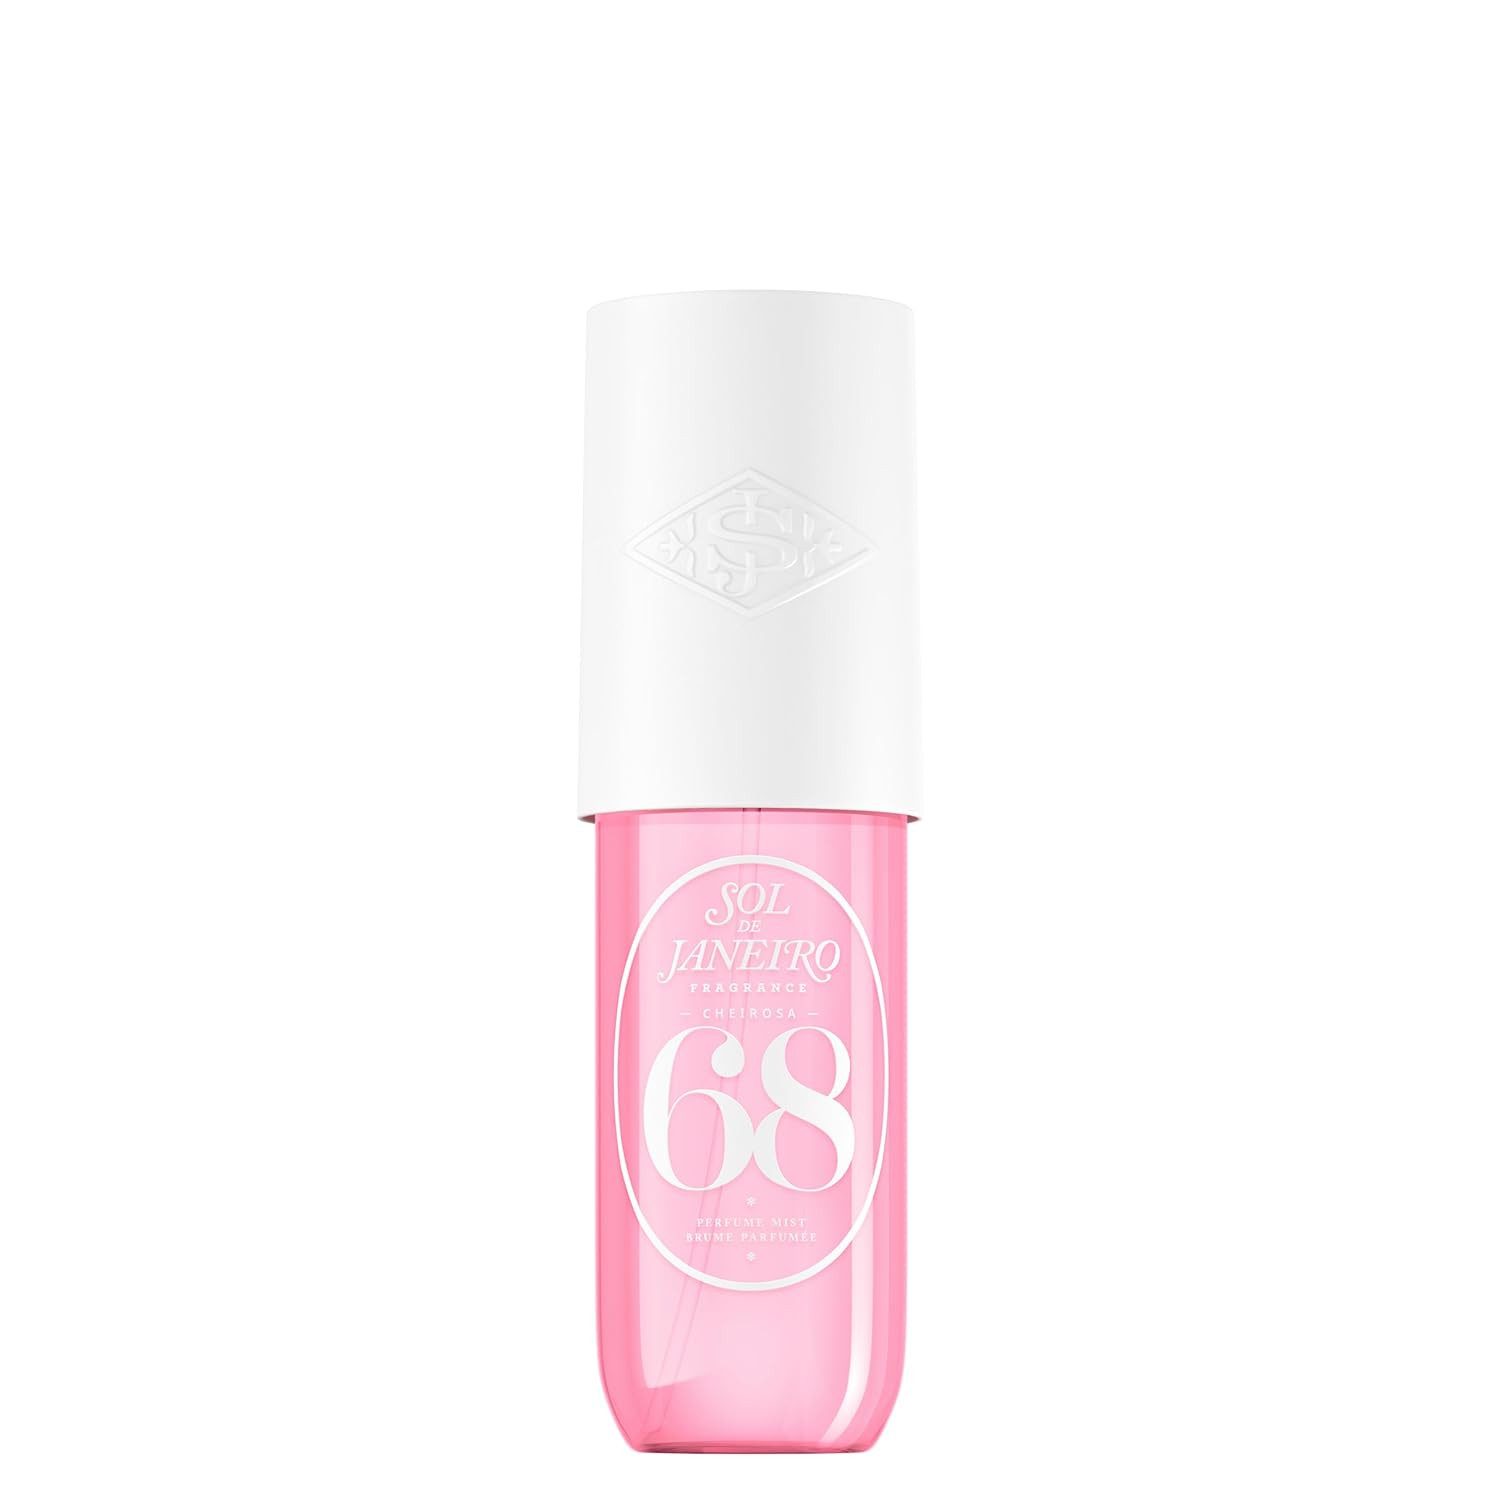 Sol de Janeiro Gesichts- und Körperspray Brazilian Crush Cheirosa 68 Beija Flor™ Perfume Mist